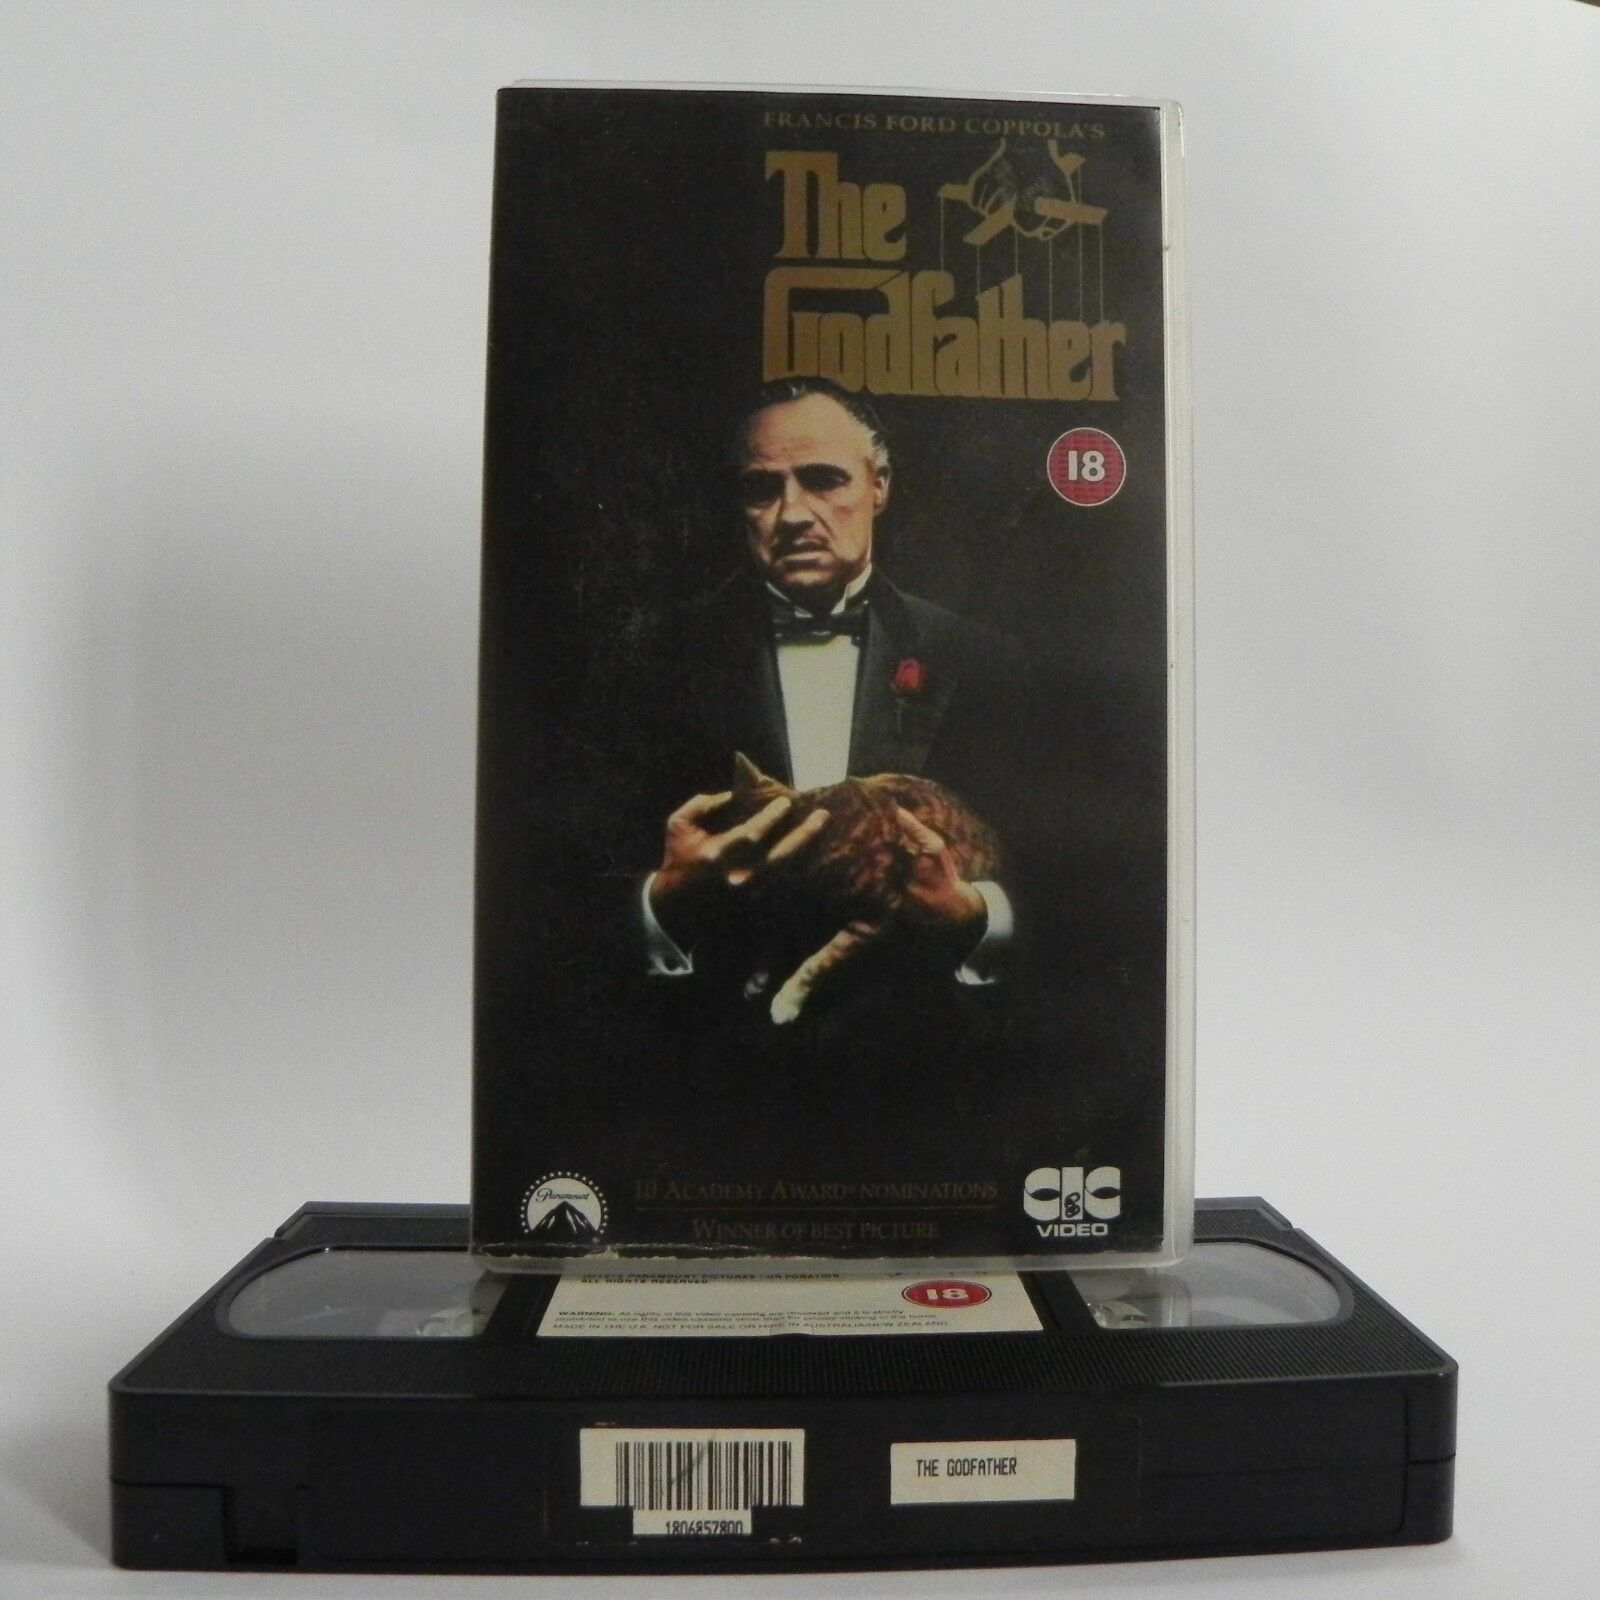 The Godfather: (1972) Classic Mafia Saga - Francis Ford Coppola's Film - Pal VHS-